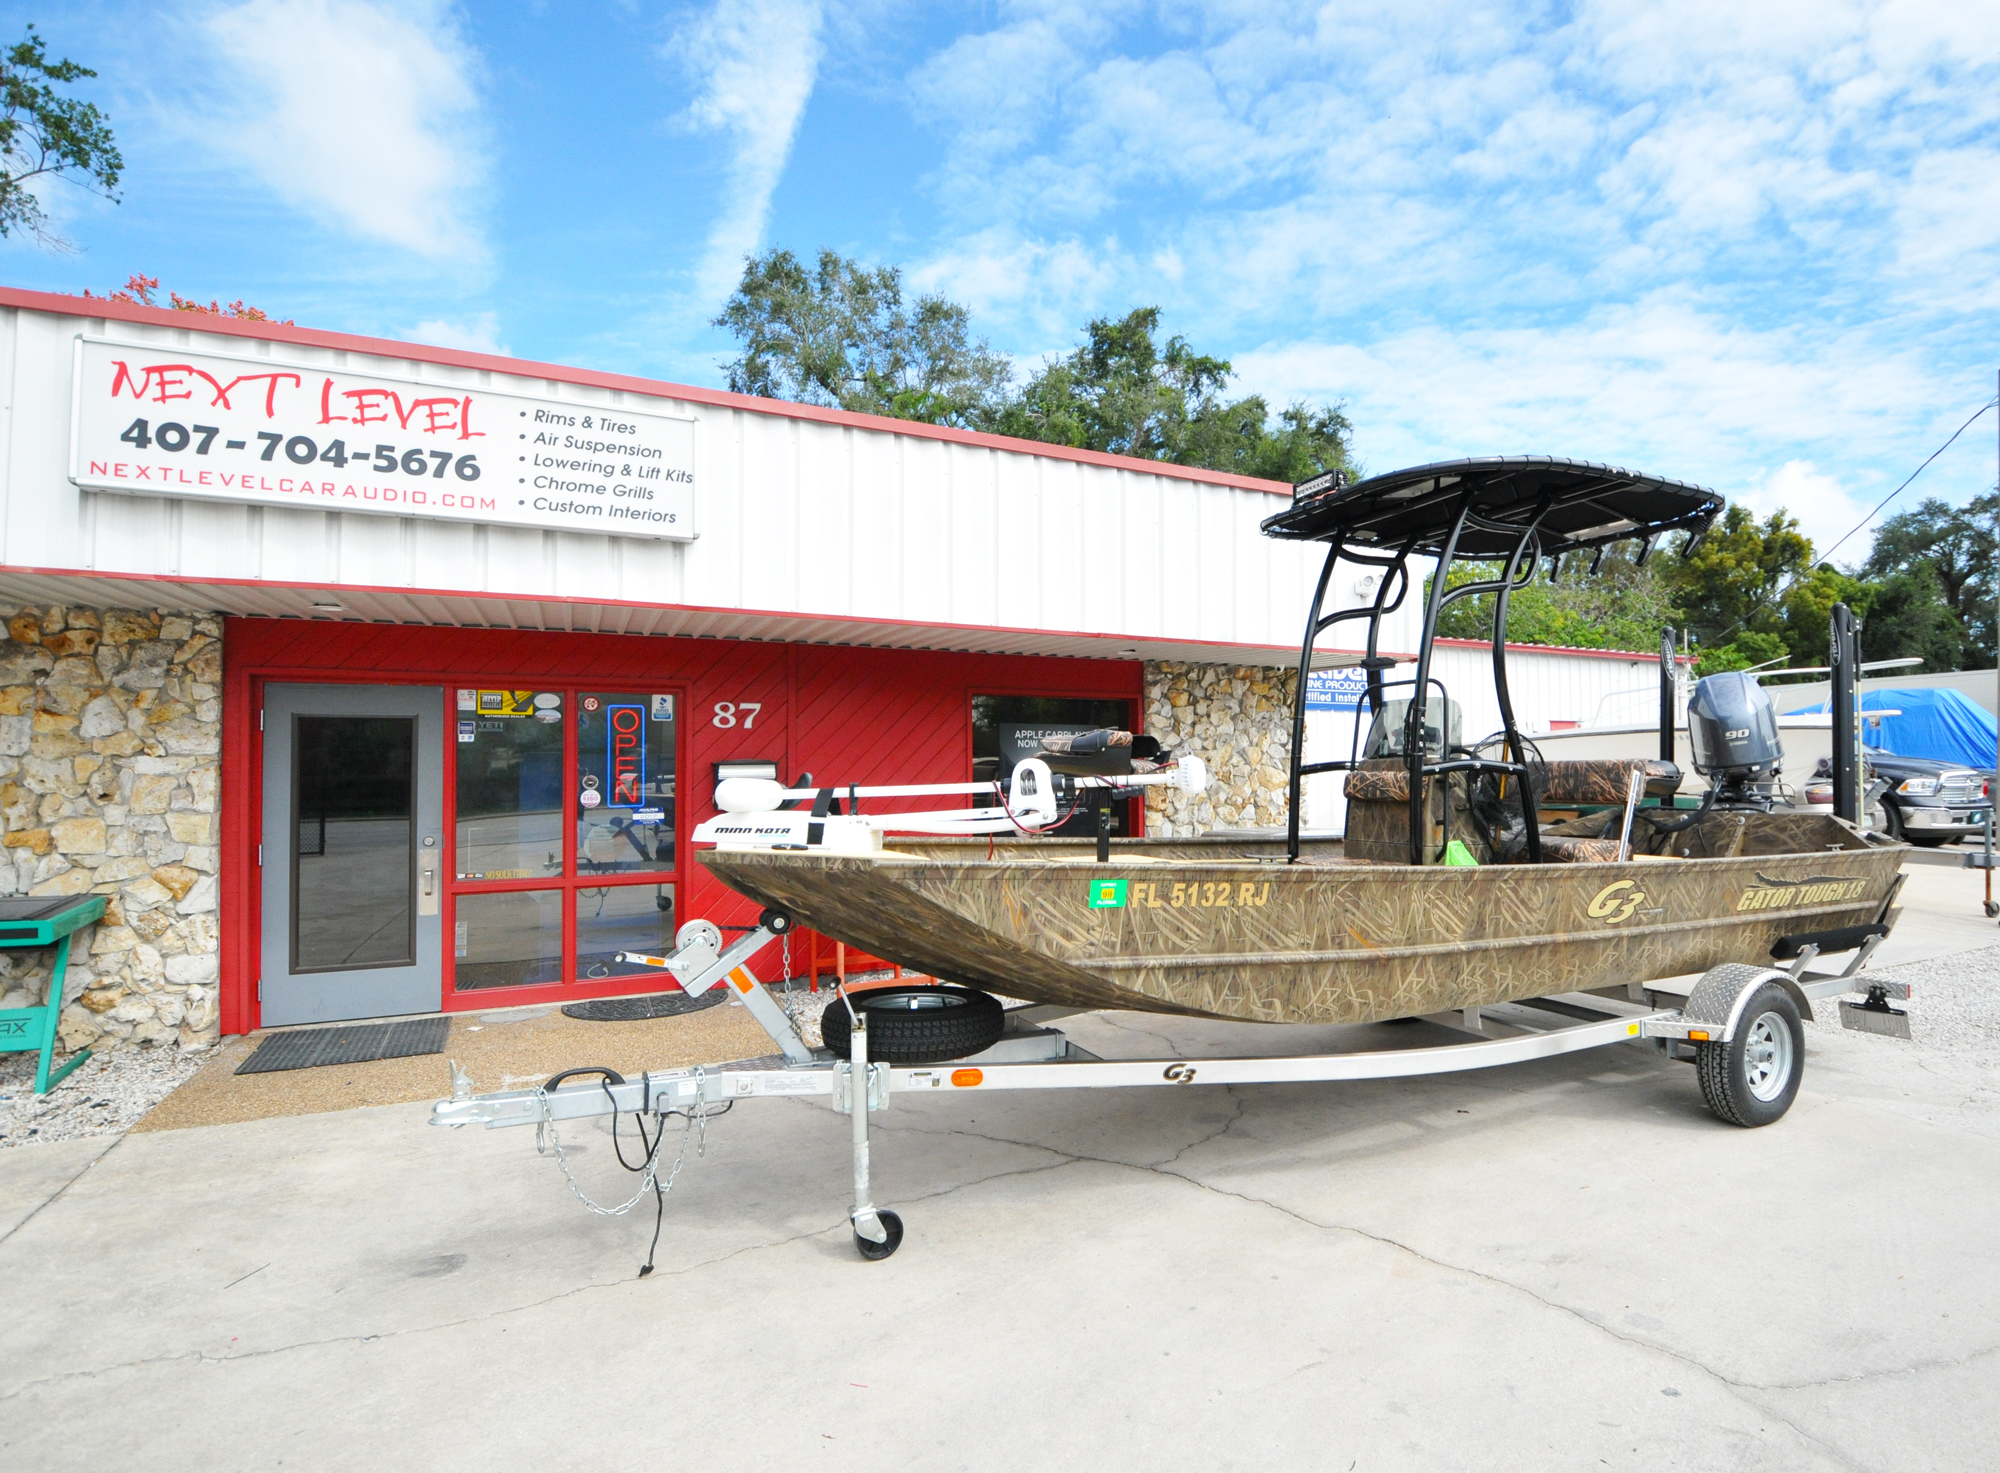 Next-Level-Camo-Aluminum-Boat-with-Tower-Orlando-Florida-Customs